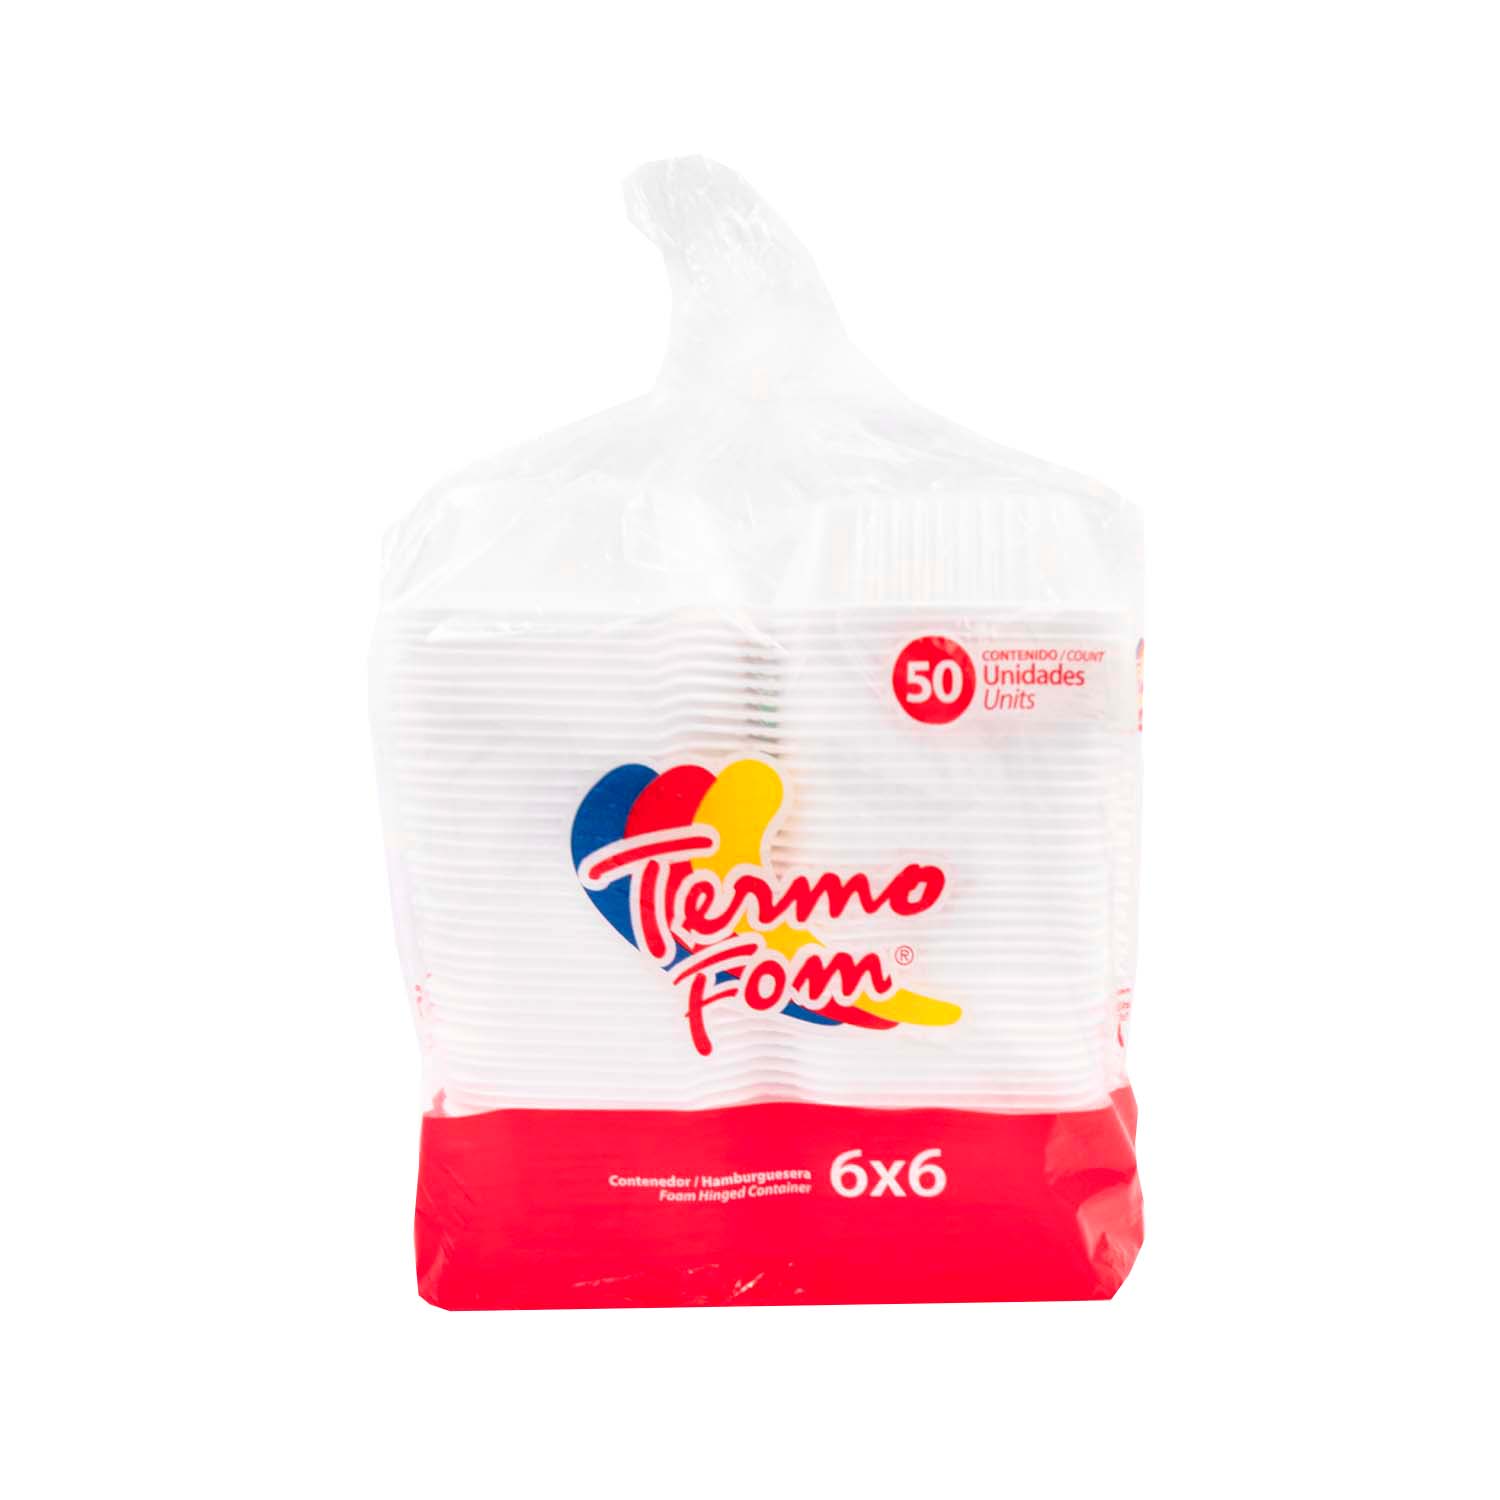 Los mas vendidos Etiquetado limpia inodoro - MultiDespensa Panamá